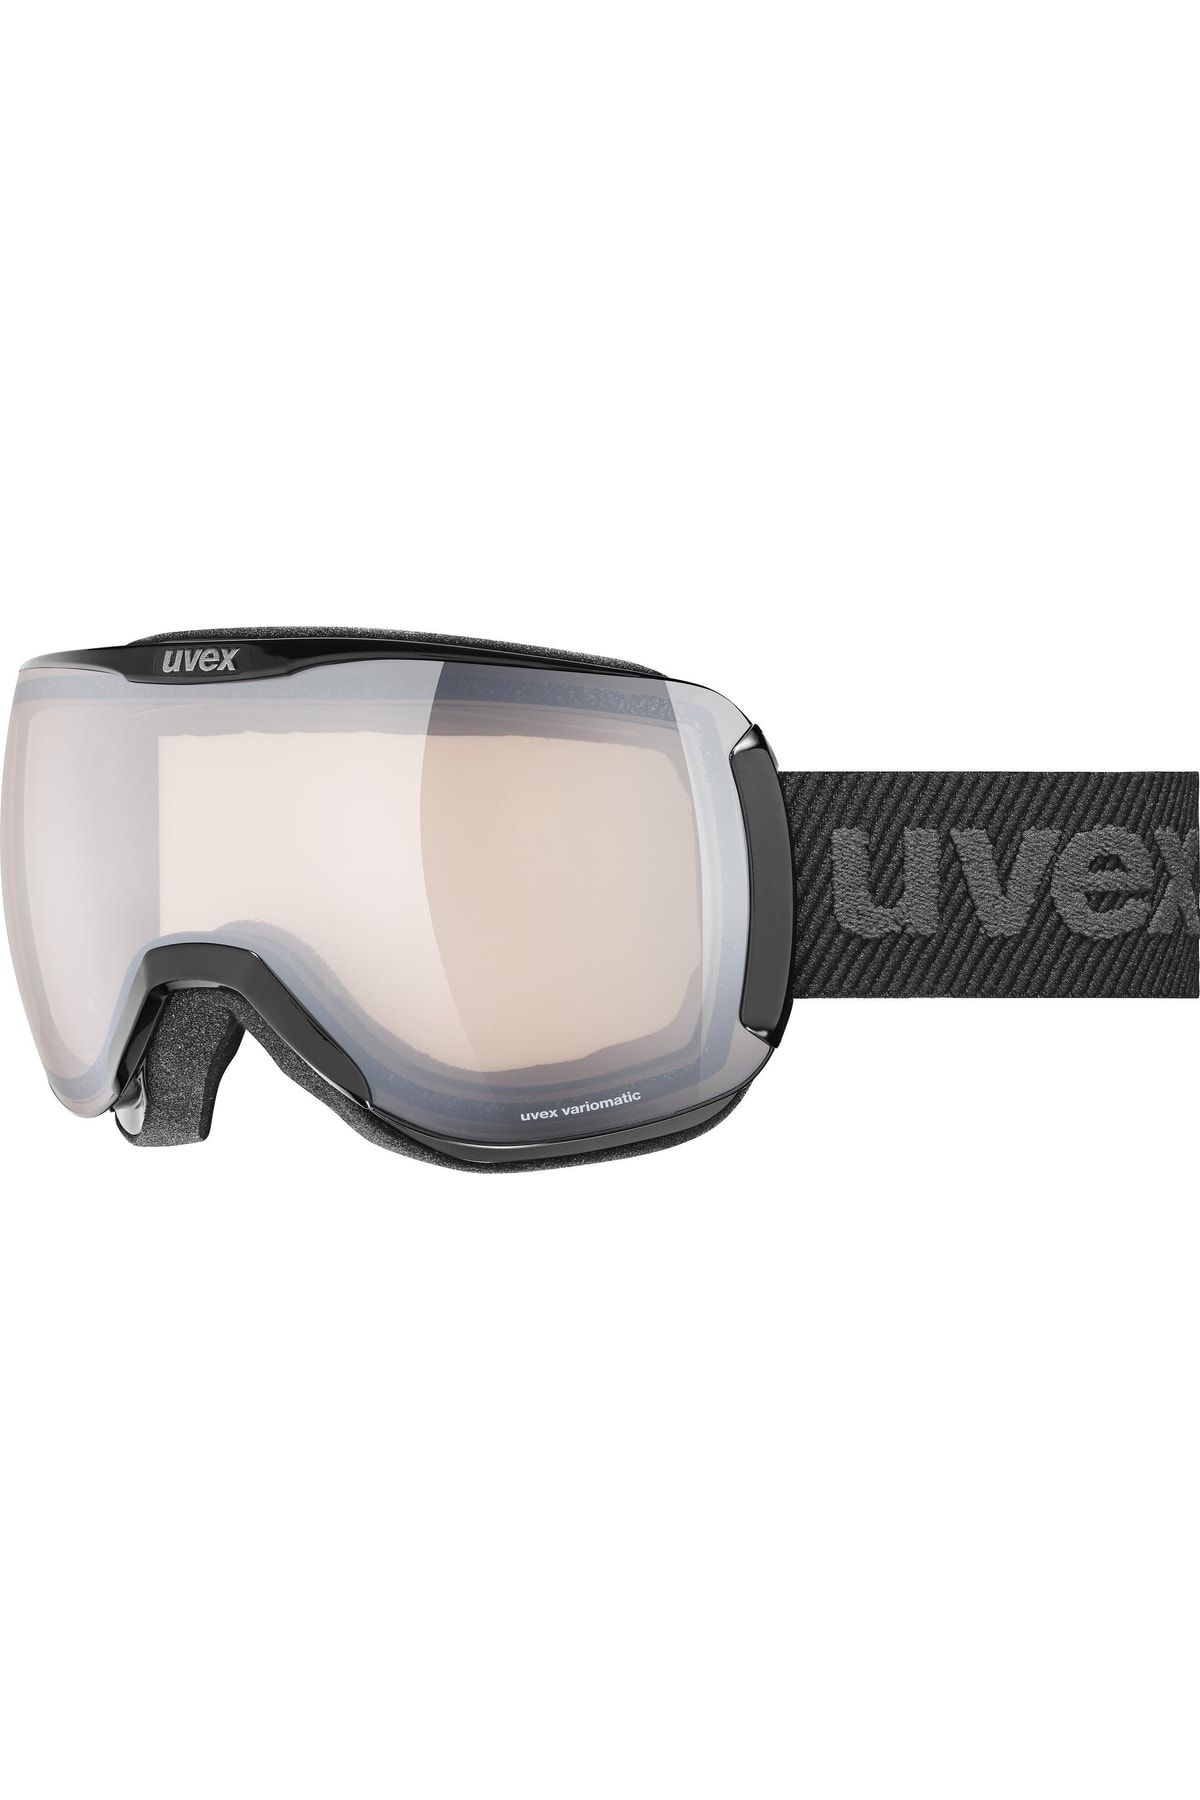 Uvex Downhill 2100 V Siyah Gümüş-berrak Kayak Gözlüğü